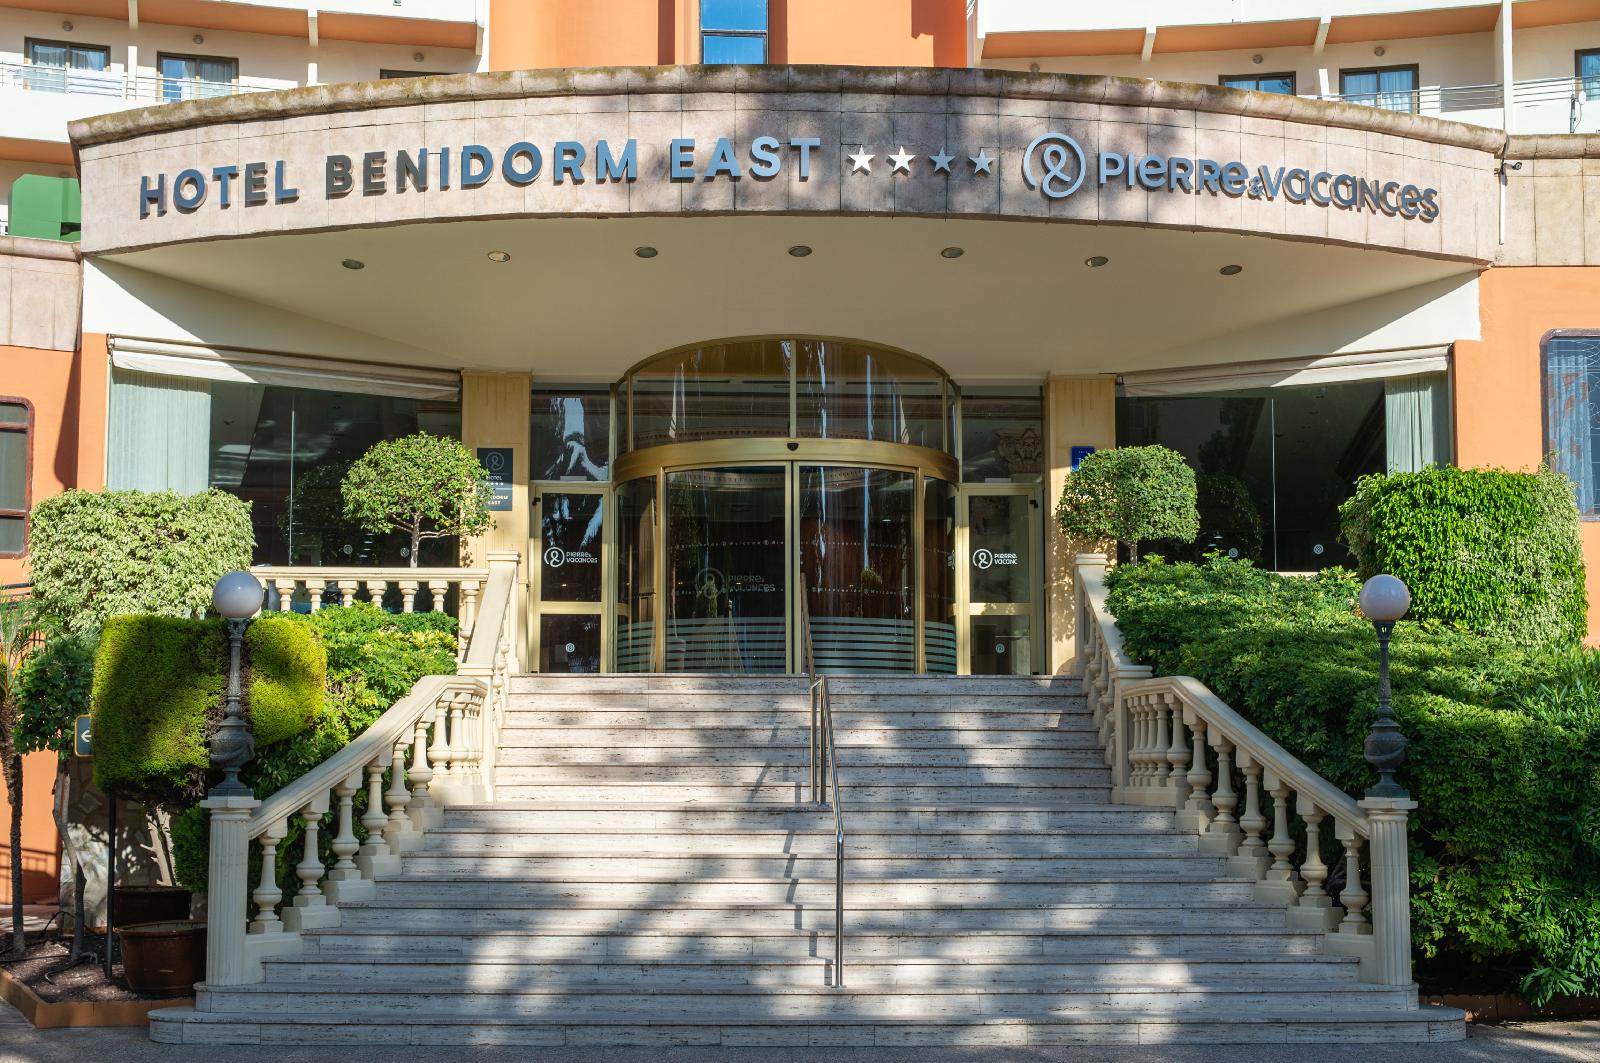 Hotel Benidorm East by Pierre & Vacances 